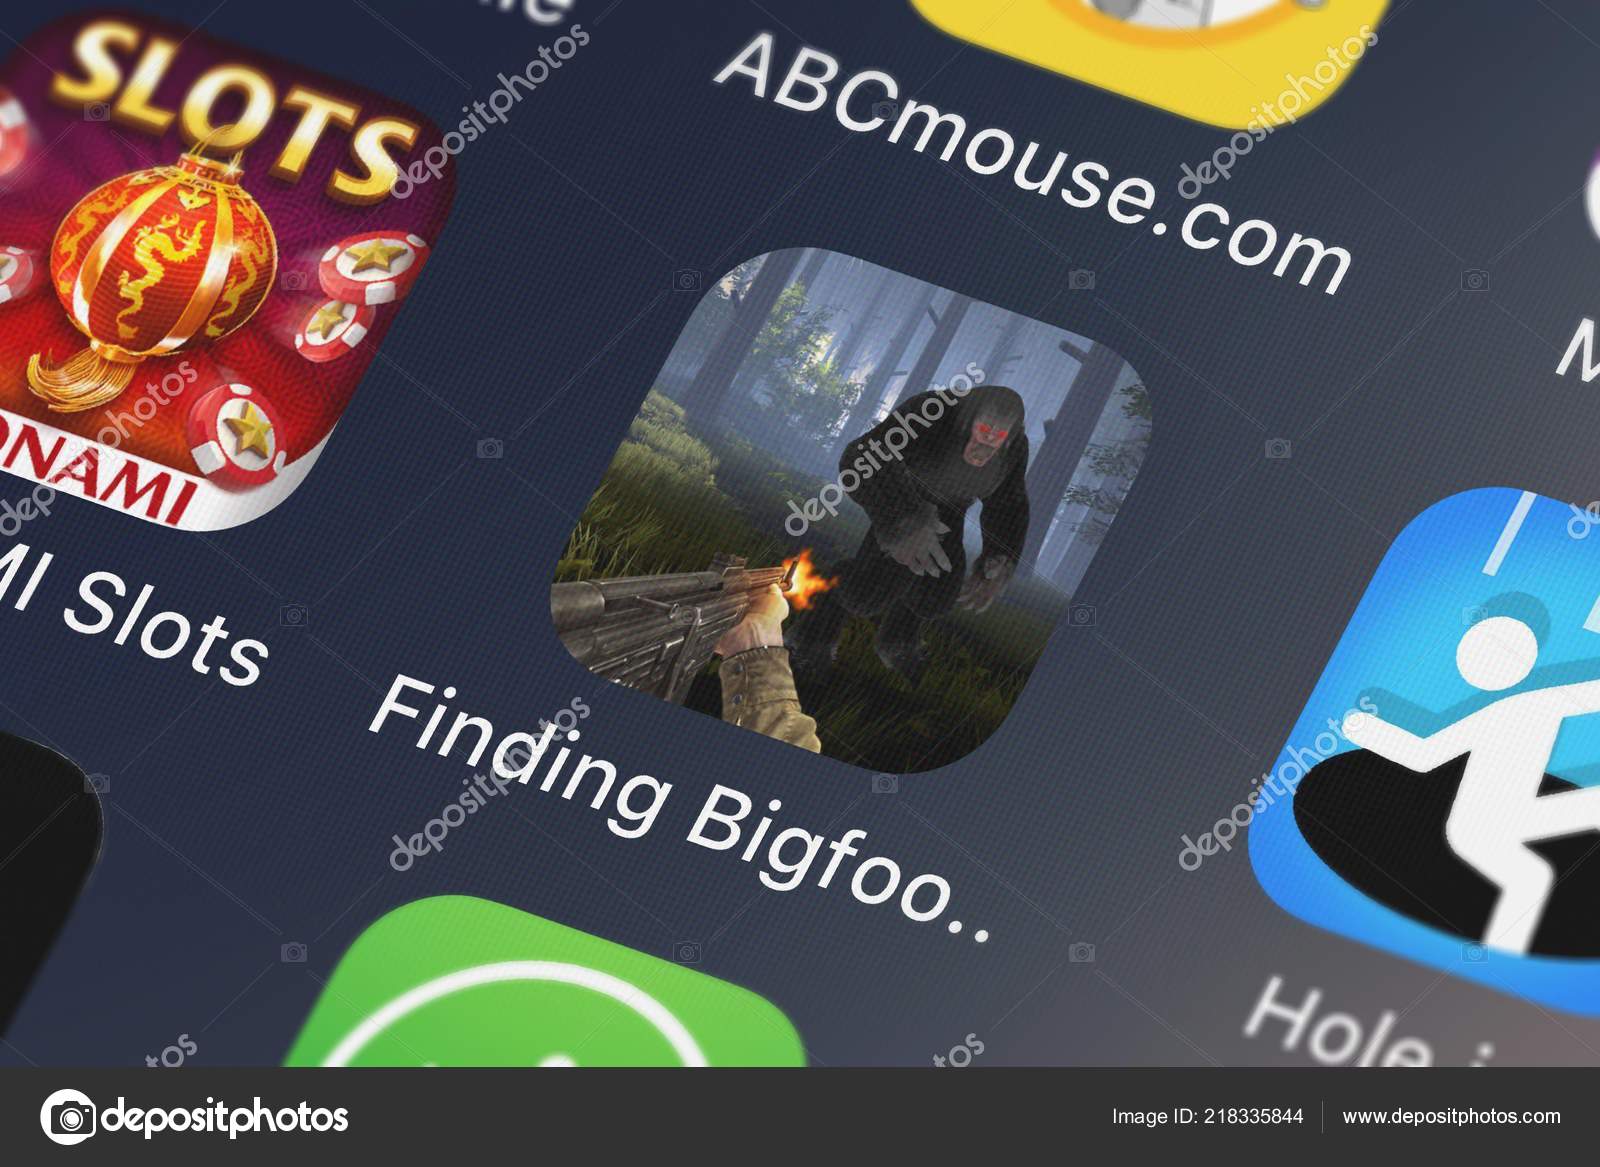 Finding Bigfoot monster hunter on the App Store